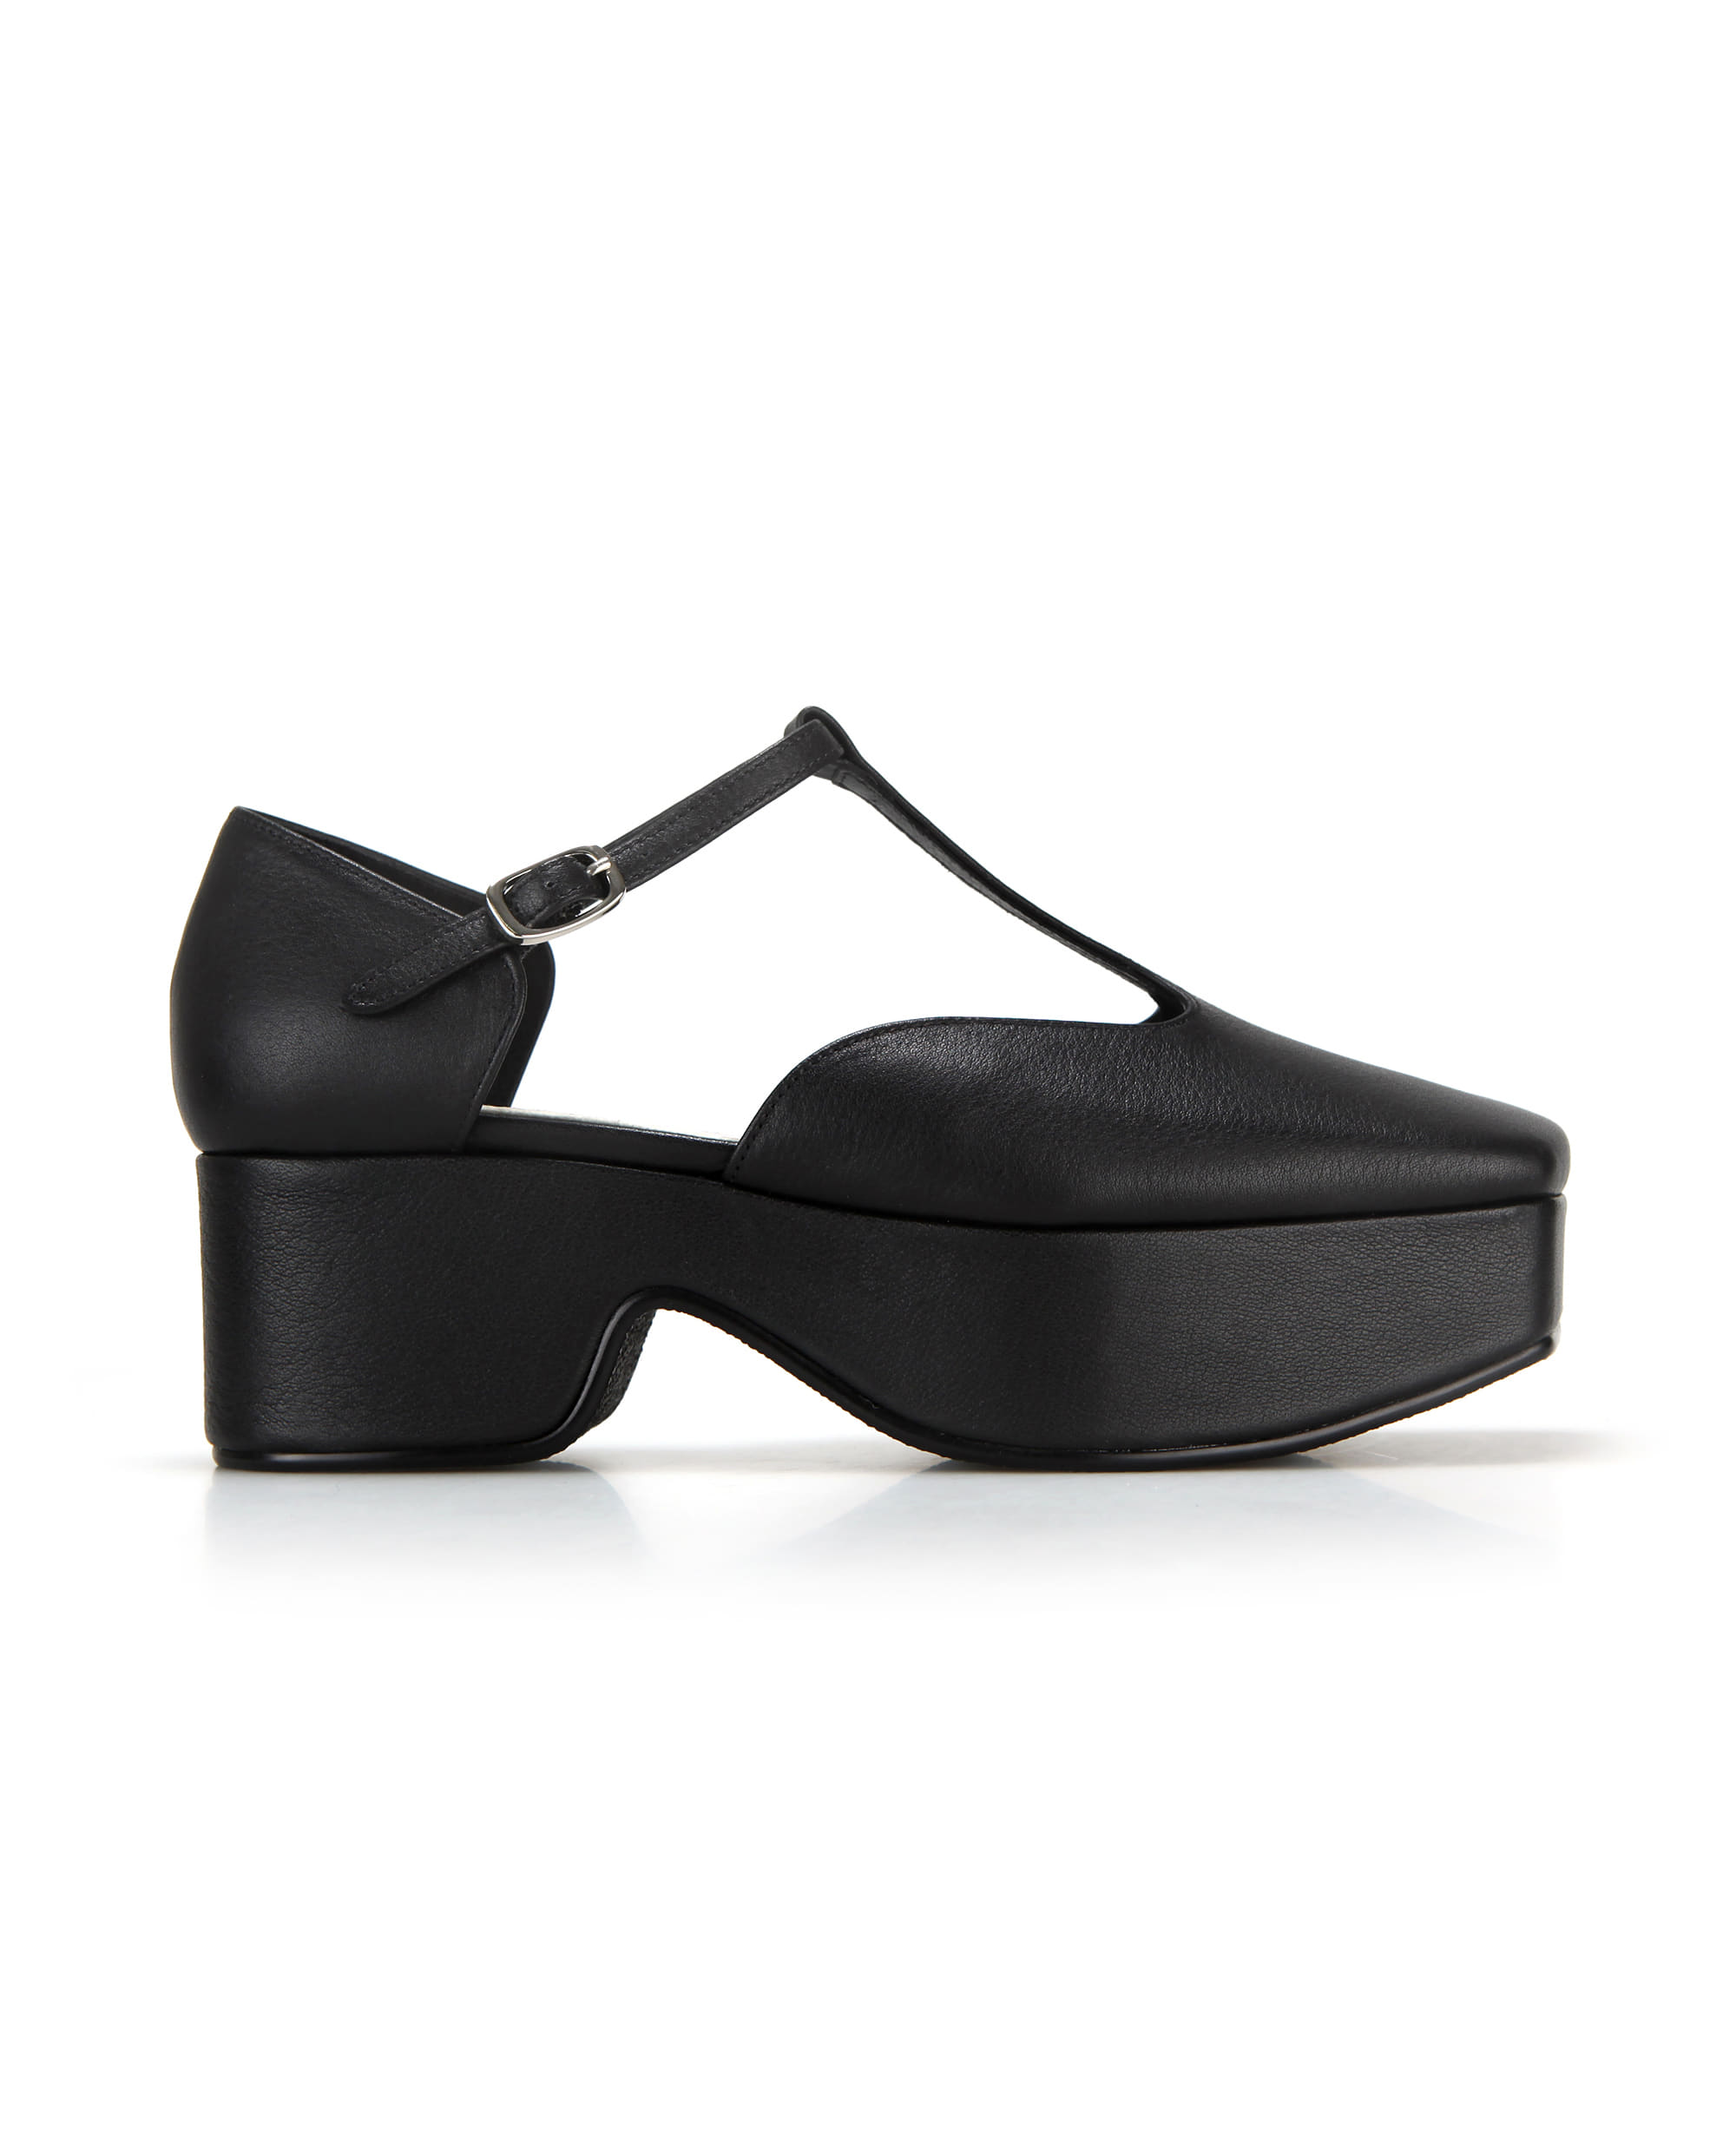 Squared toe T-strap mary jane platforms | Black